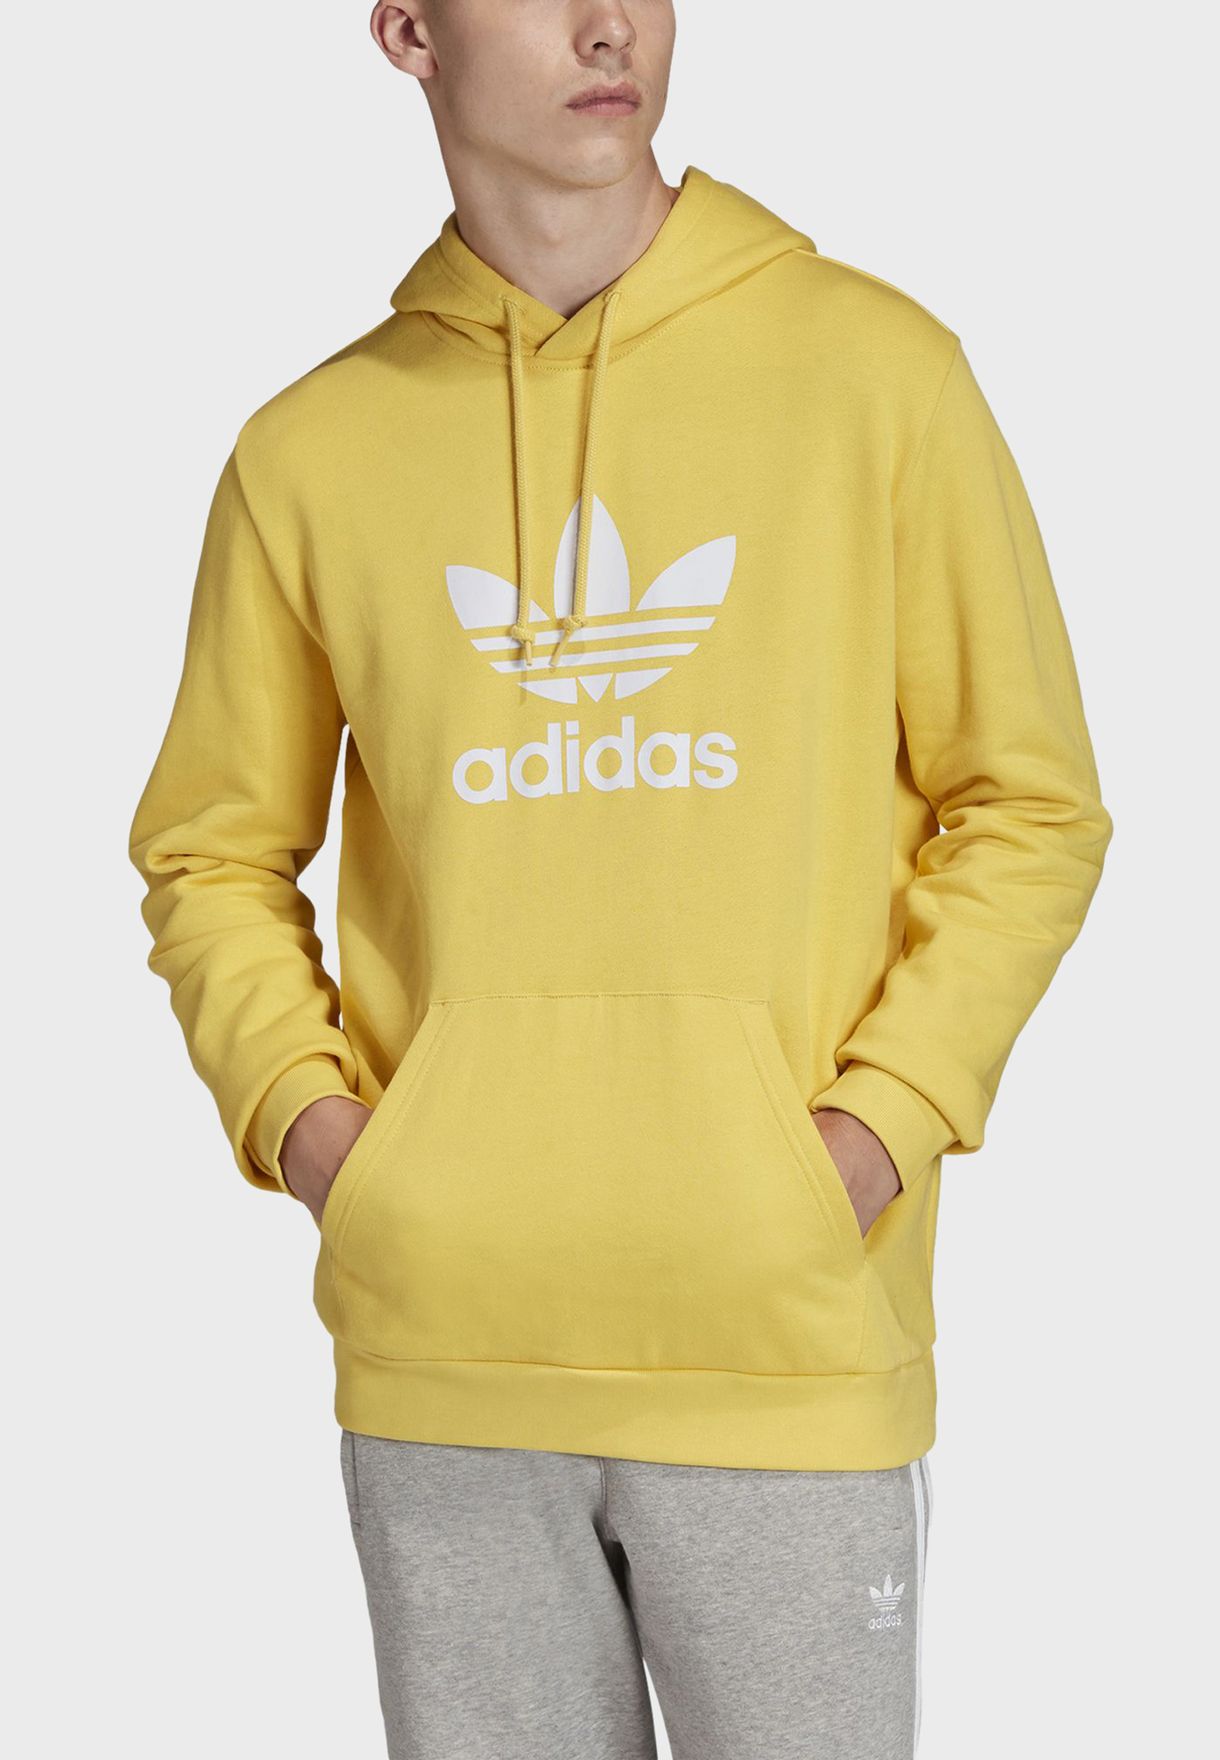 adidas original yellow hoodie 